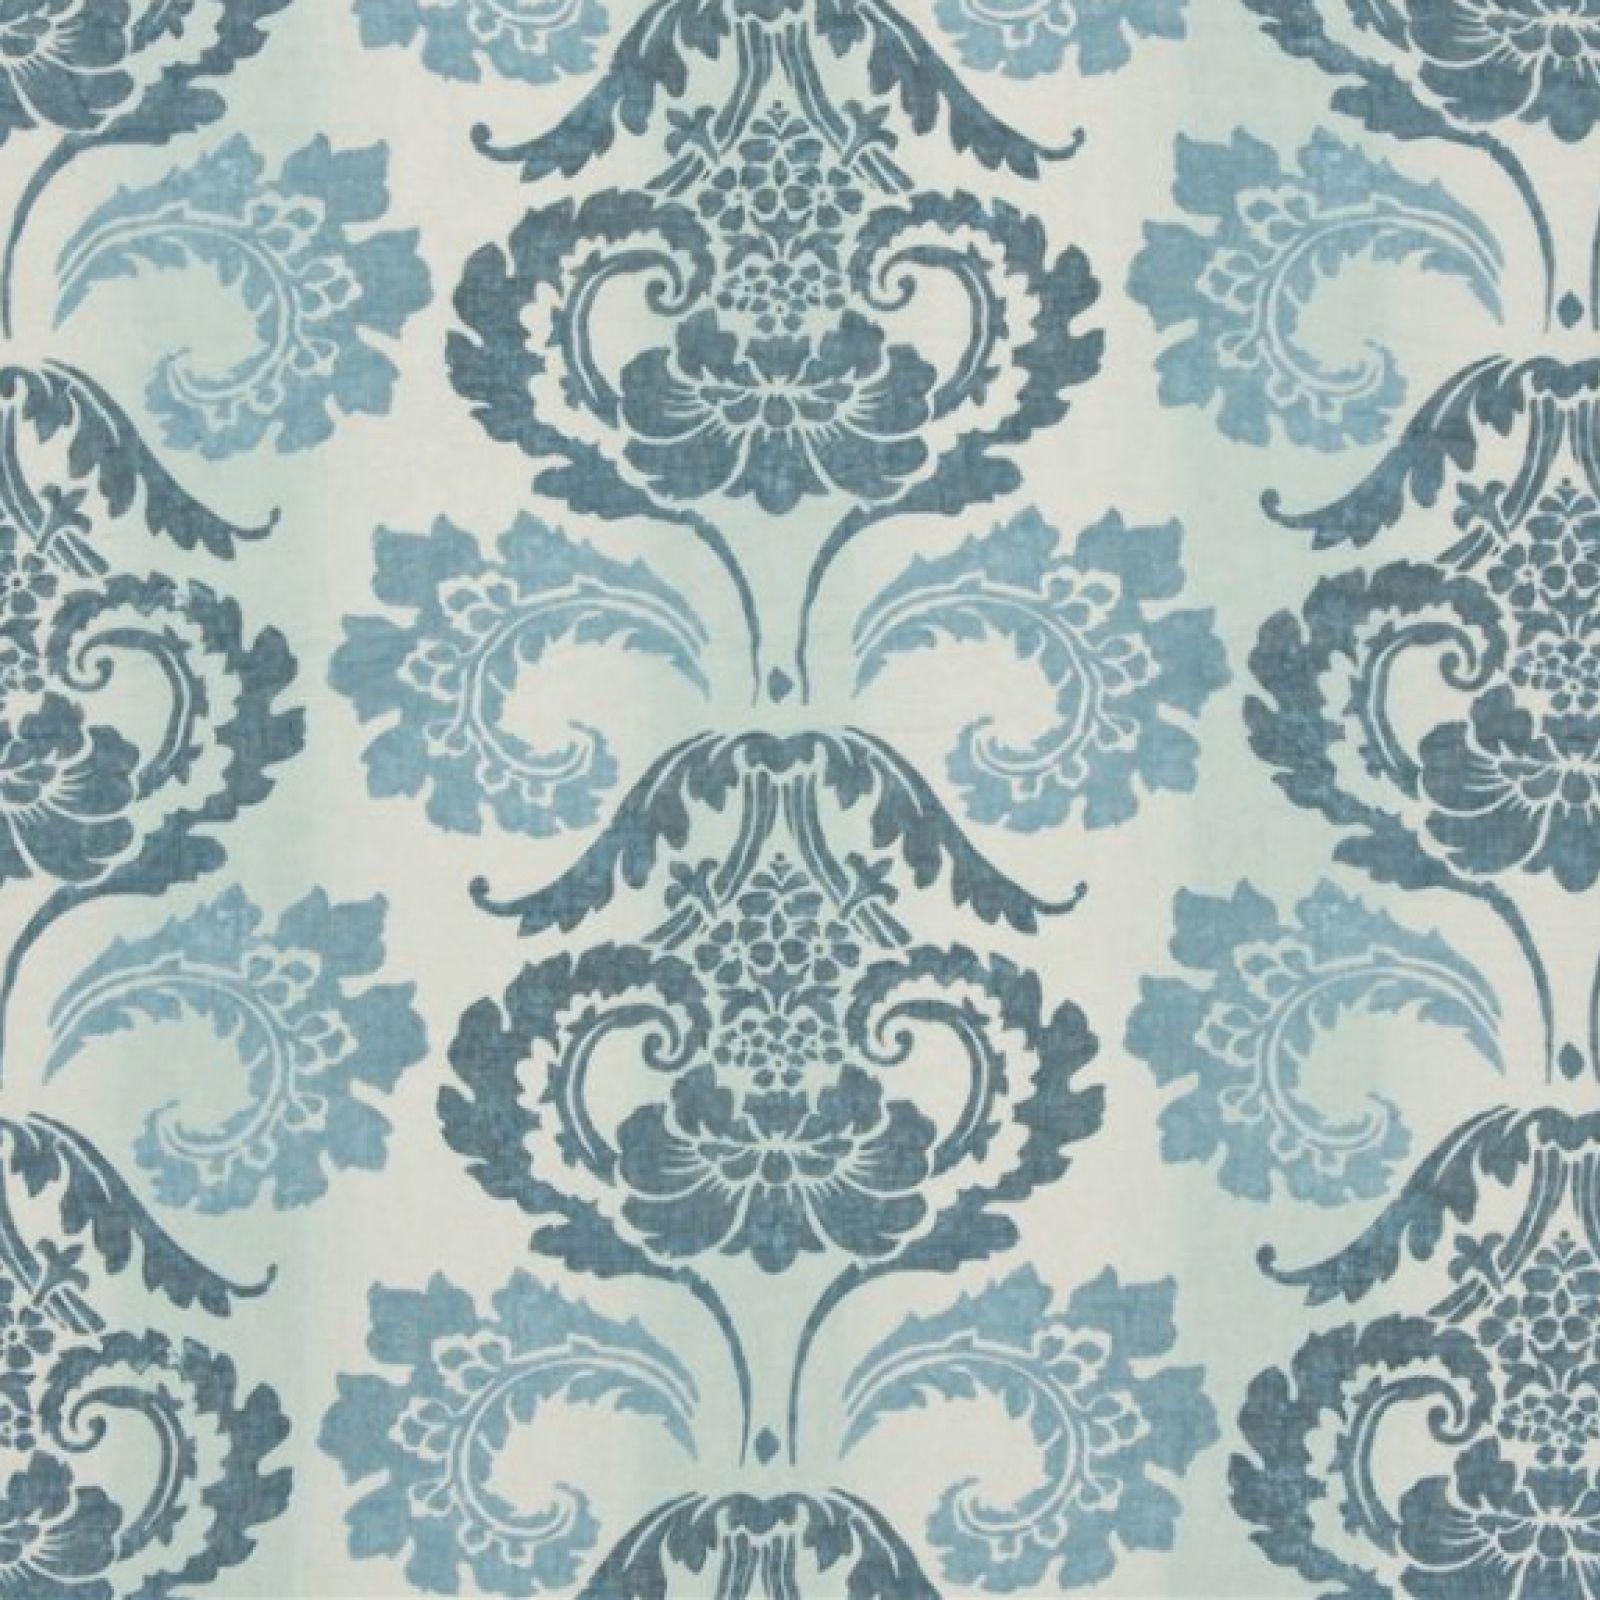 Byzantium fabric - choice of 3 colourways - 100% Linen